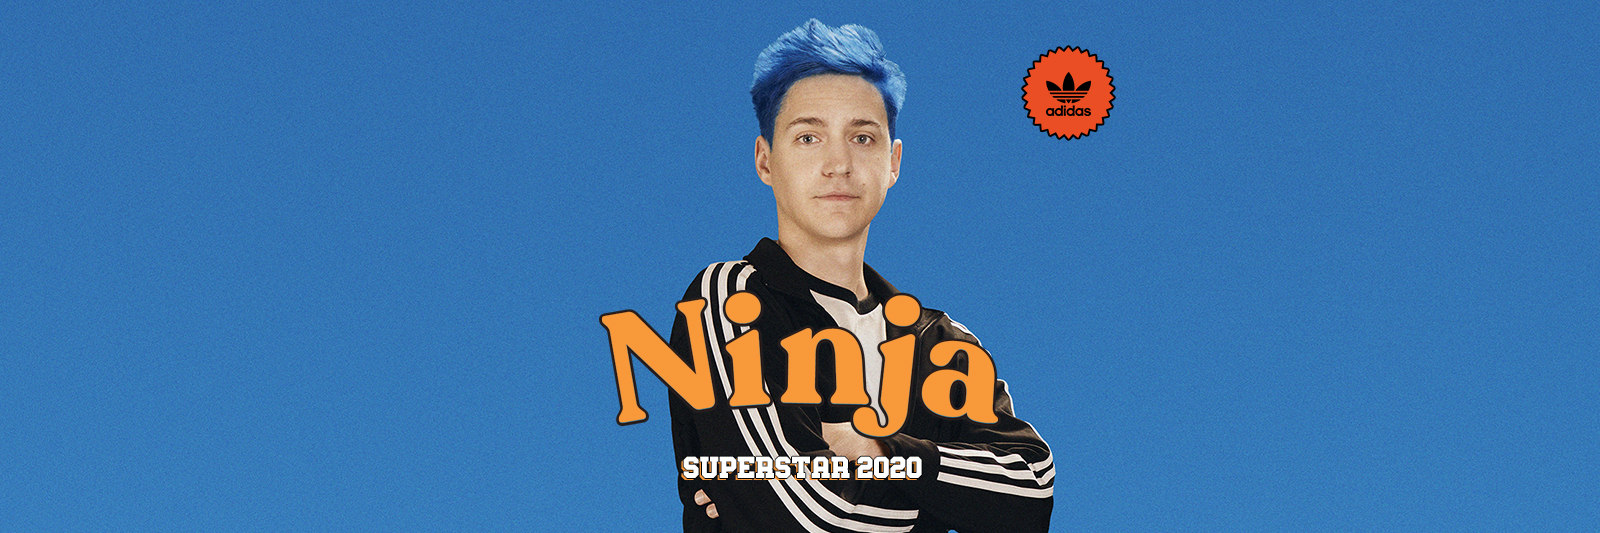 adidas superstar ninja